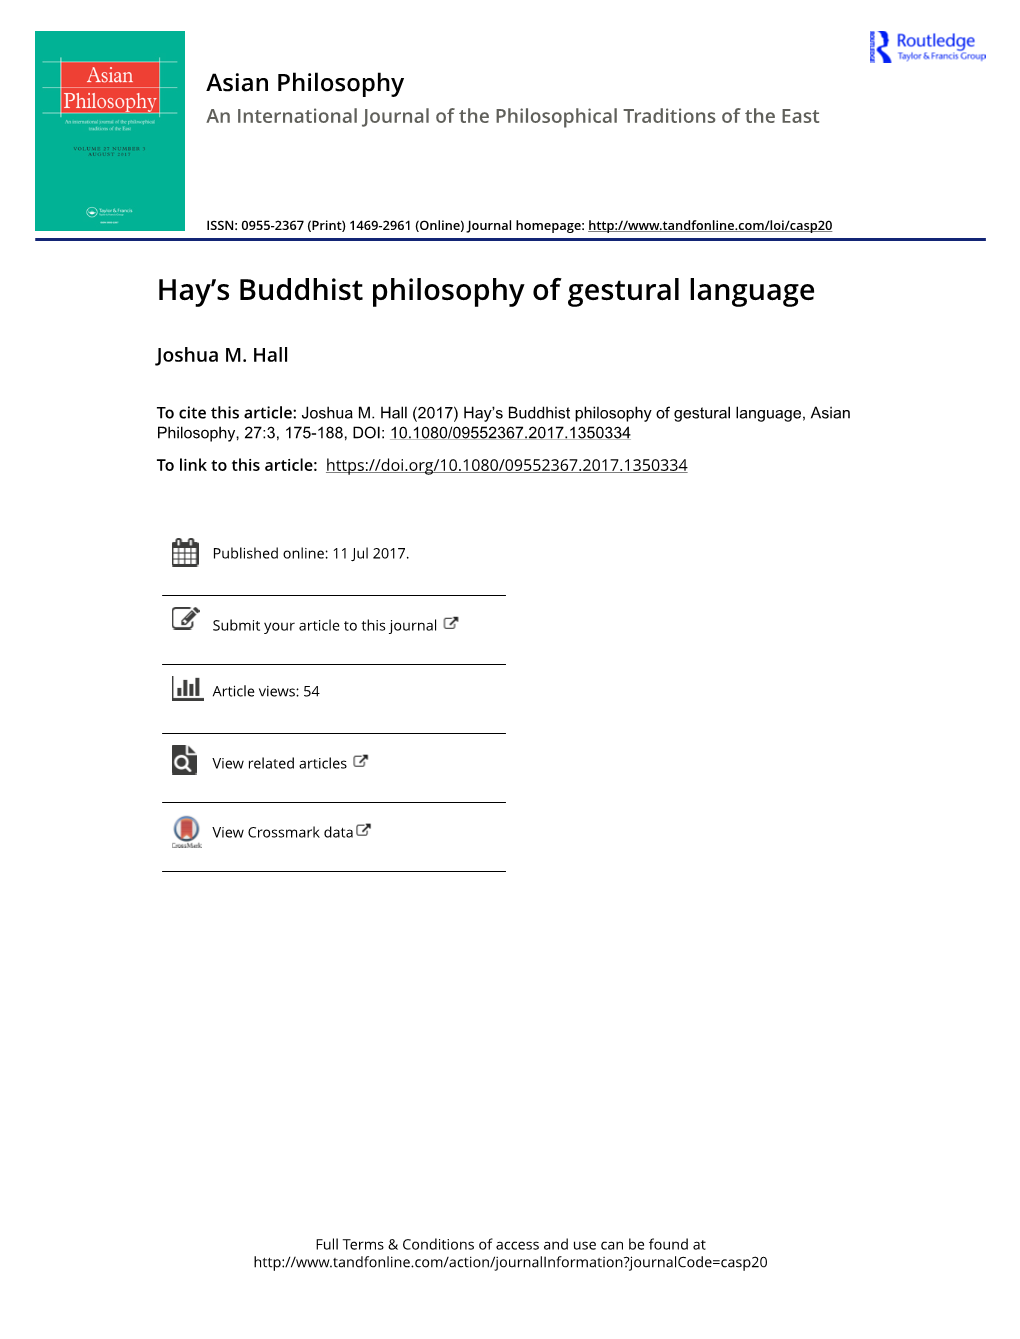 Hay's Buddhist Philosophy of Gestural Language